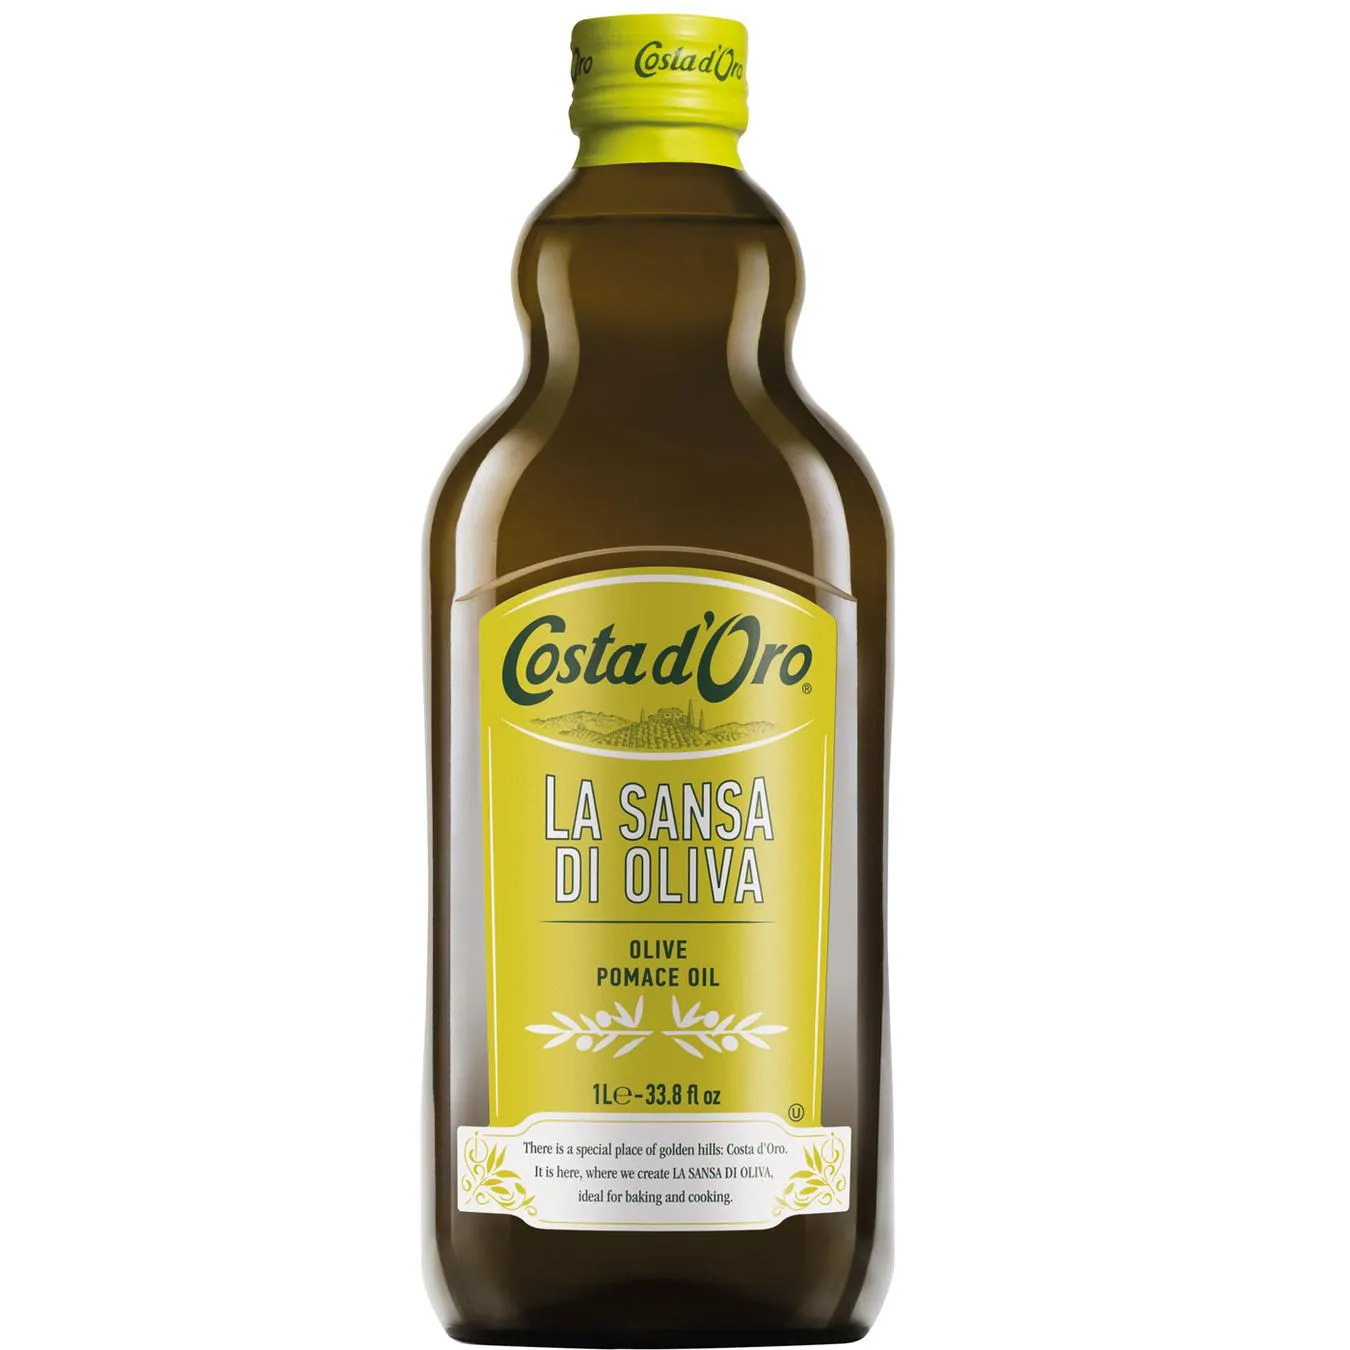 dầu olive pomace la sansa di oliva costad oro chai 1l - costad oro olive oil pomace la sansa di oliva 1l 1